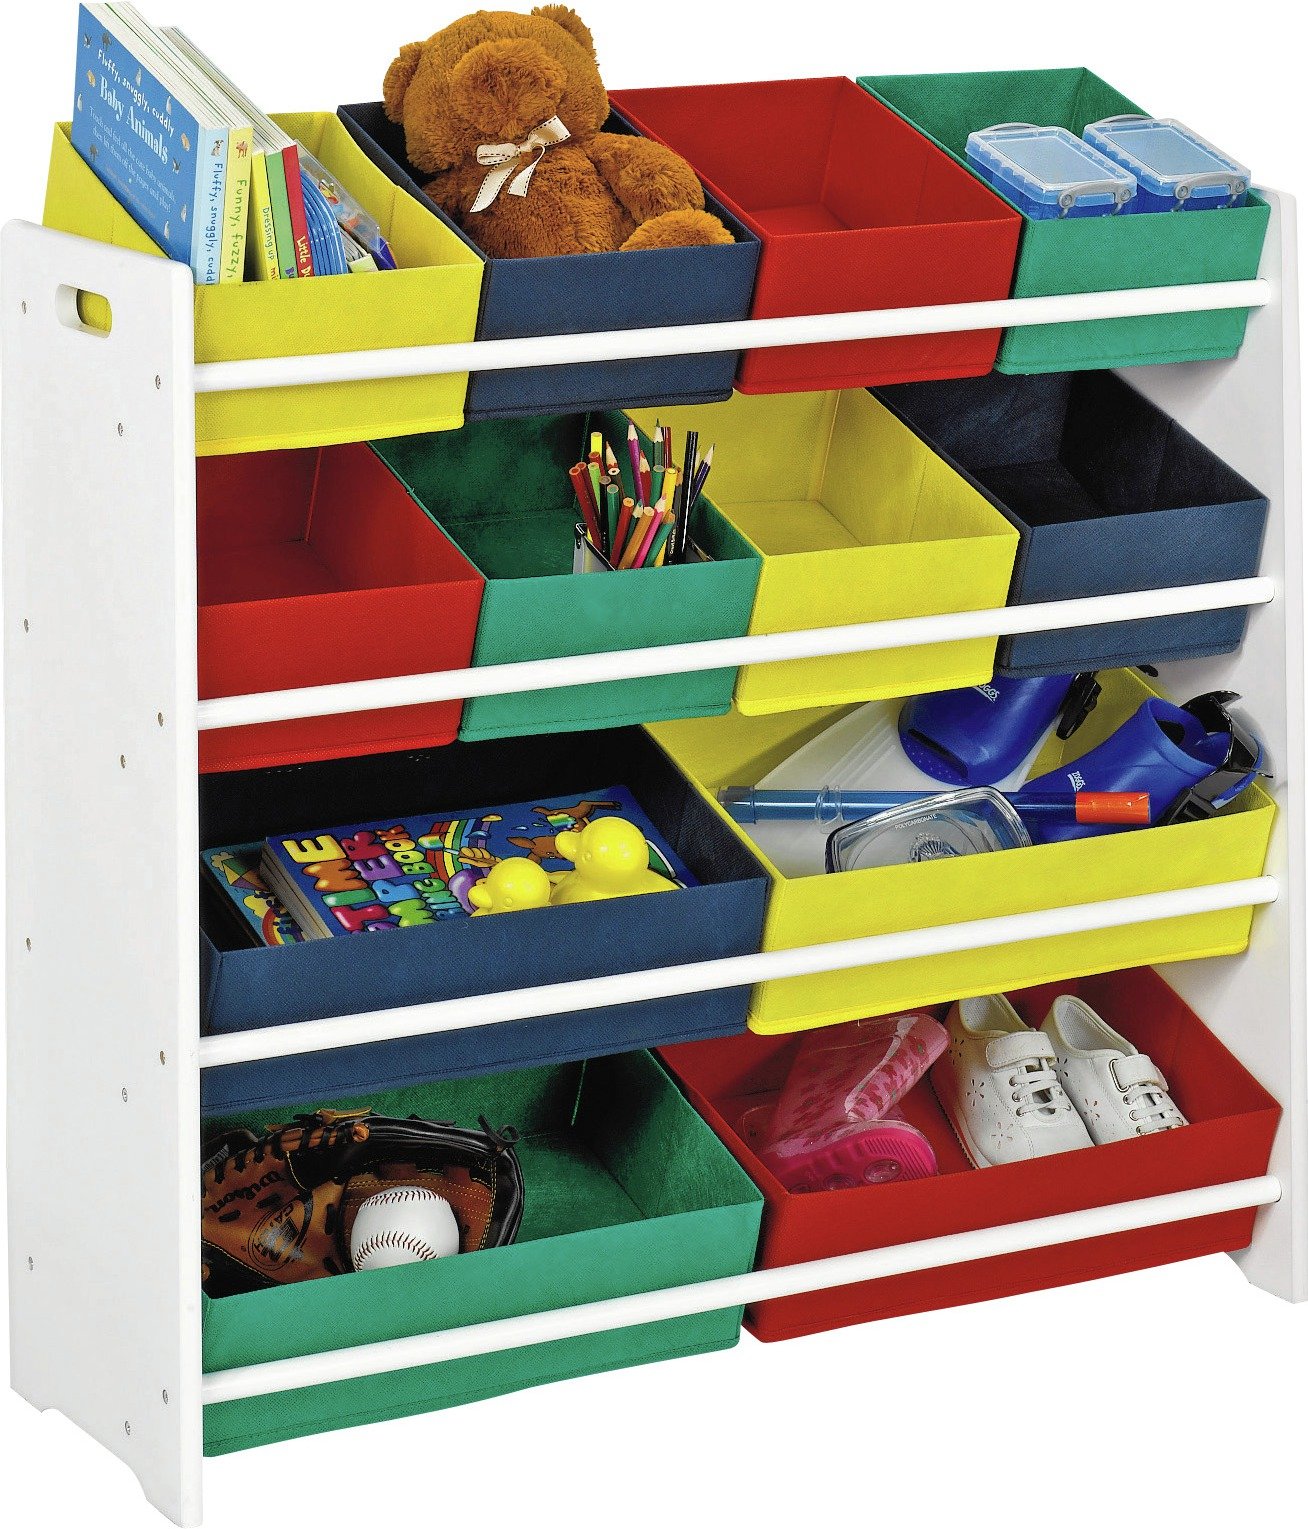 Argos Home 4 Tier Kids Basket Storage Unit with Bins review